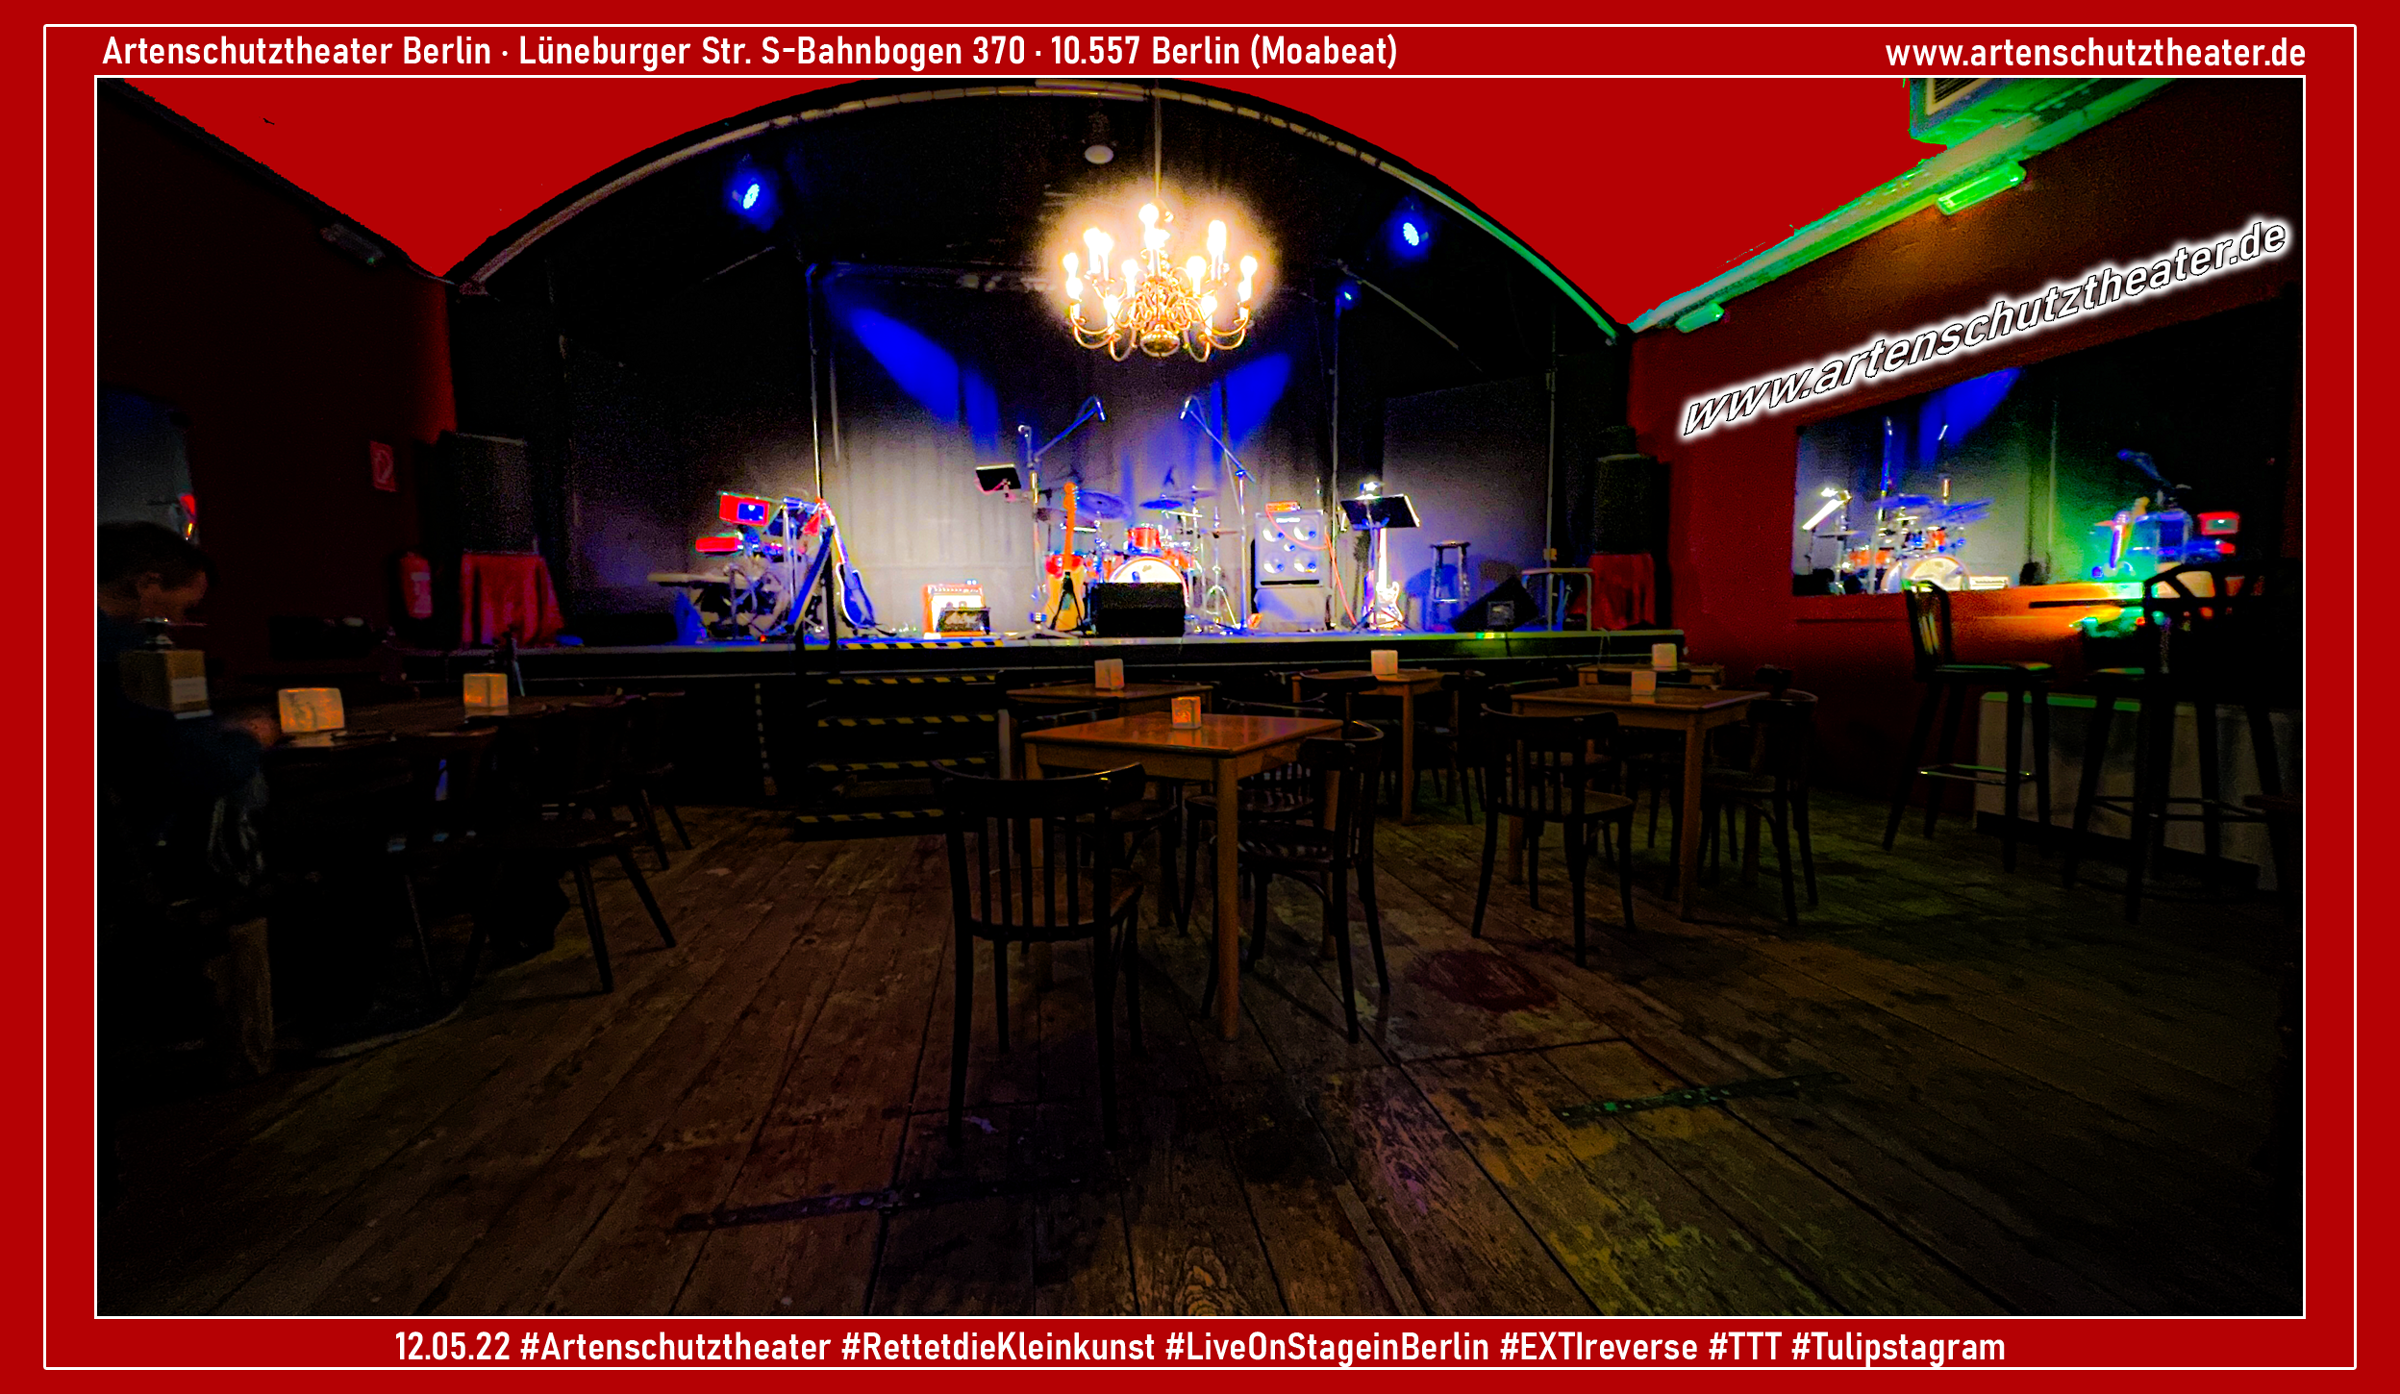 12.05.22 #Artenschutztheater #RettetdieKleinkunst #LiveOnStageInBerlin #EXITreverse #TTT #Tulipstagram